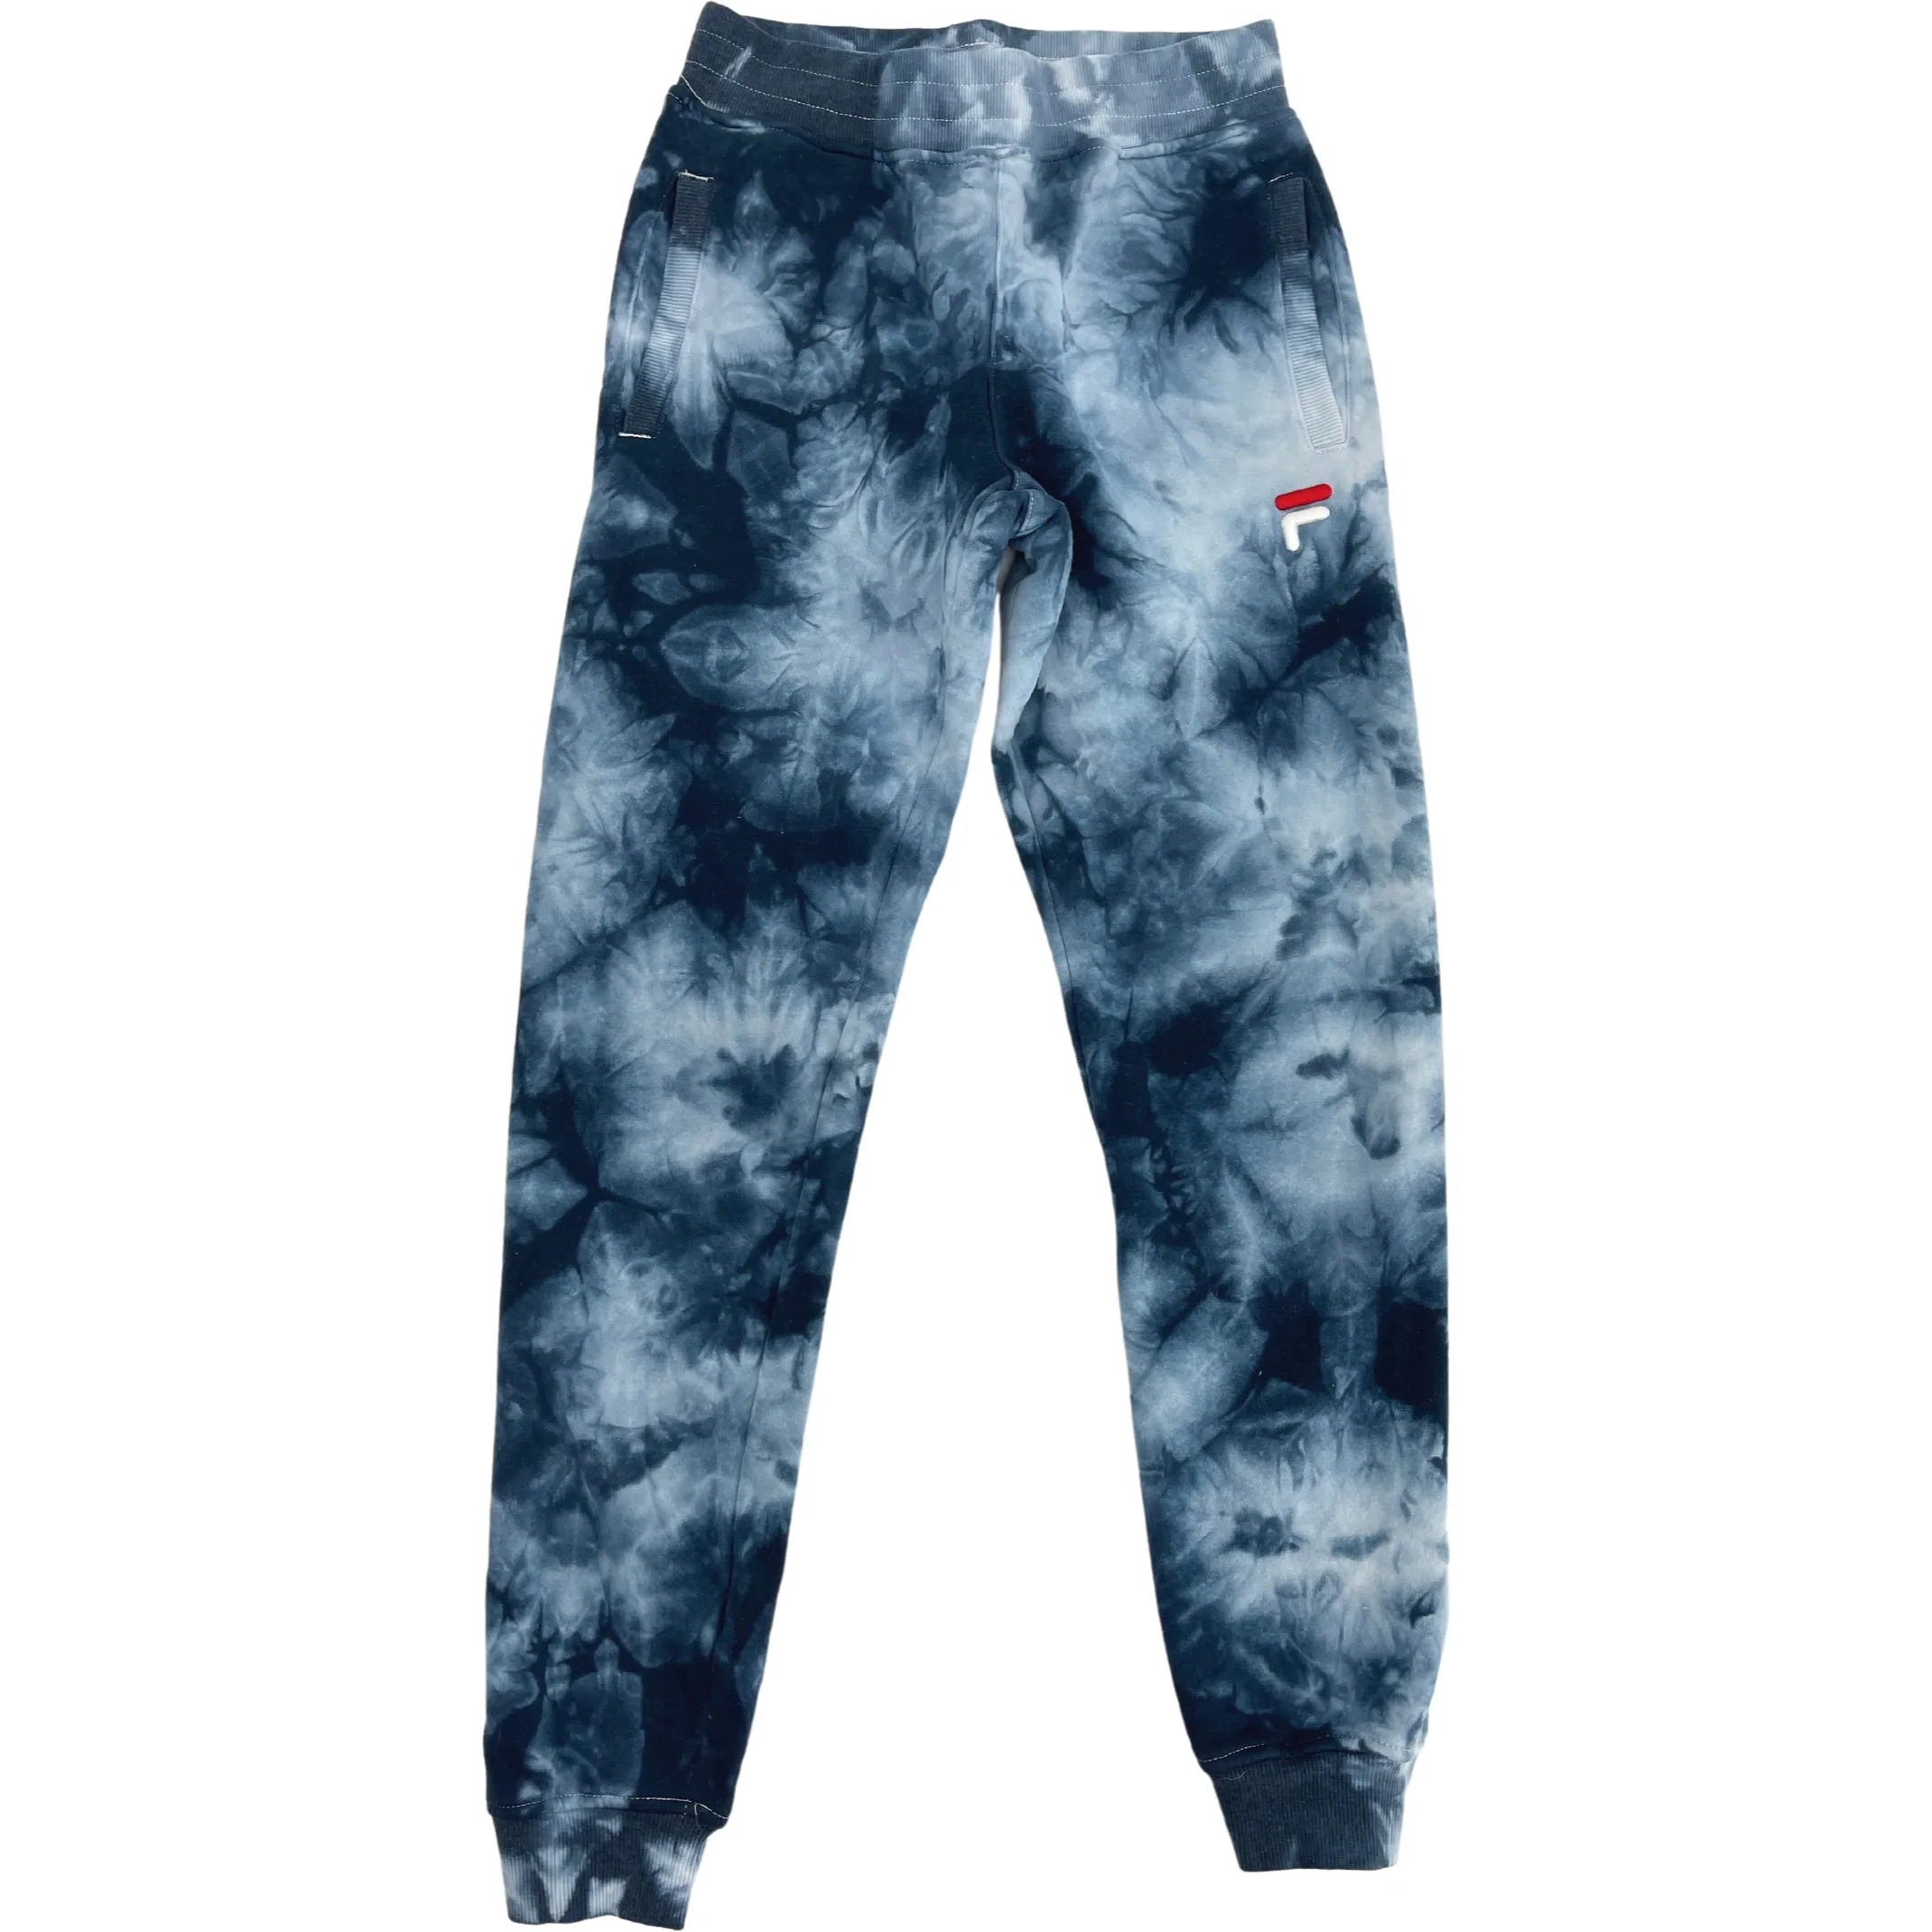 Fila Girl’s Sweatpants / Blue & White / Tie-Dye Look / Various Sizes